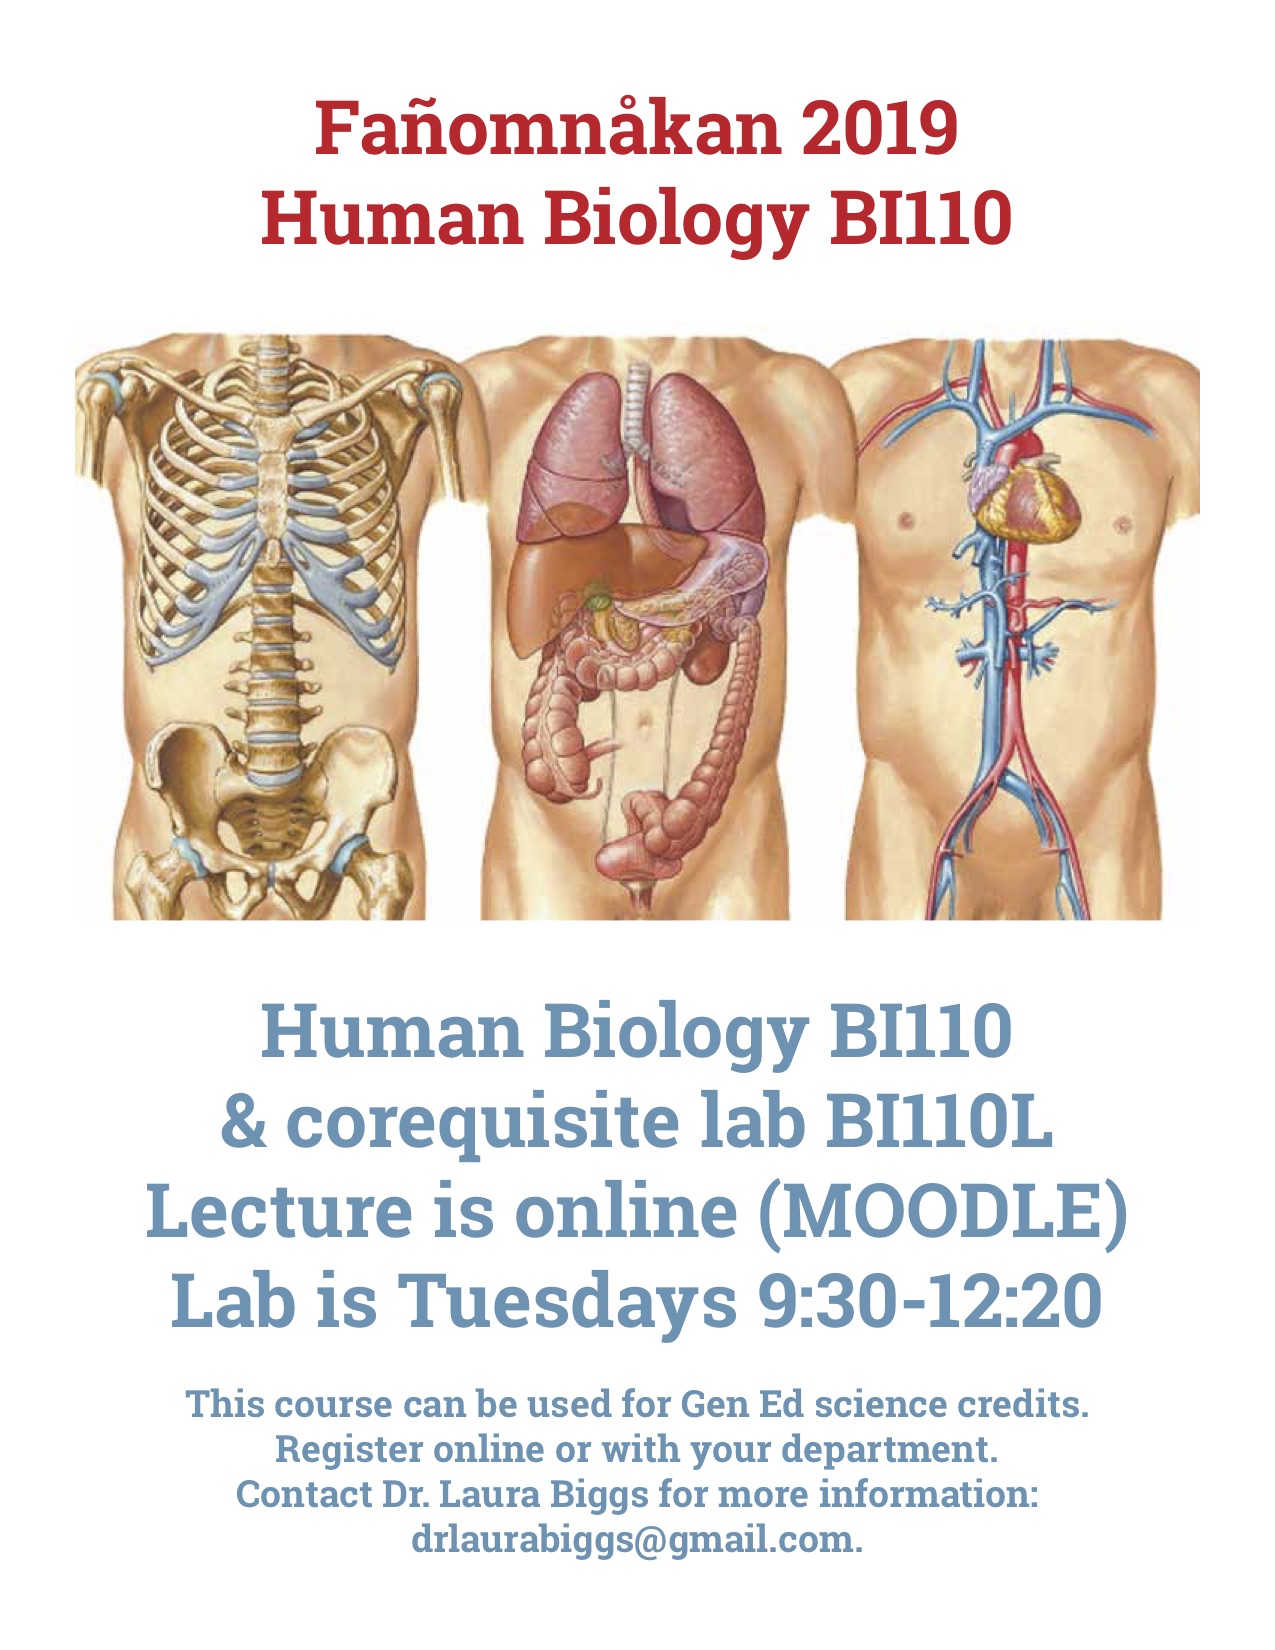 Human Biology online